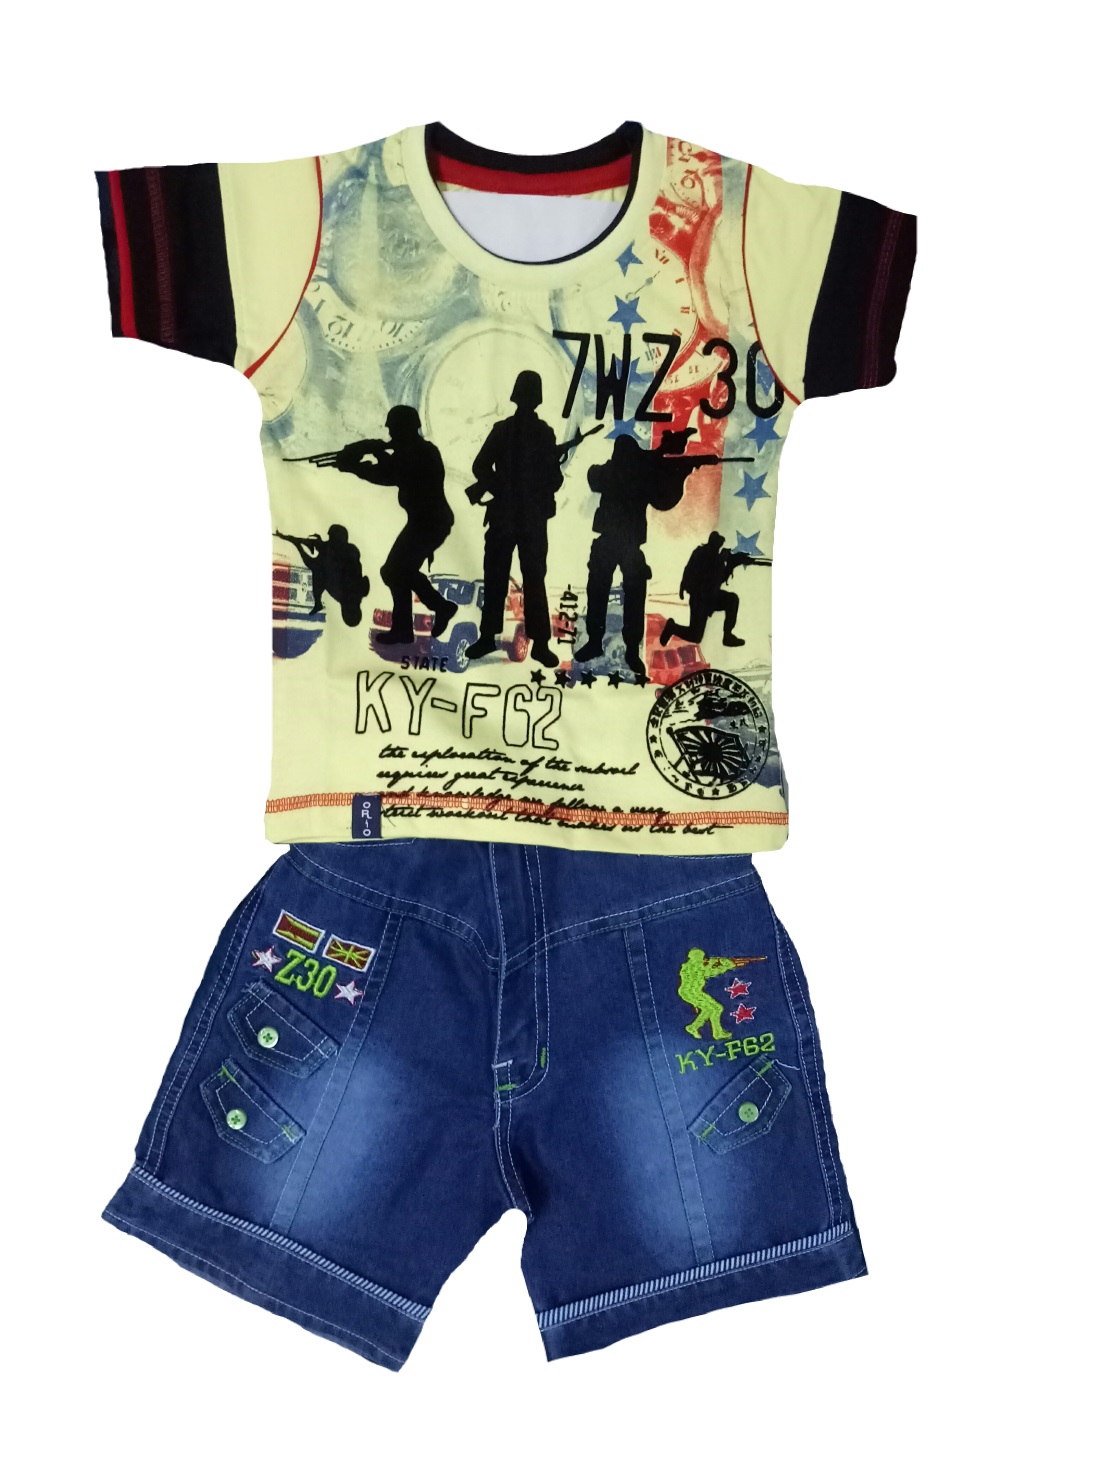 Buy Boys tshirt pant set Online @ ₹725 from ShopClues